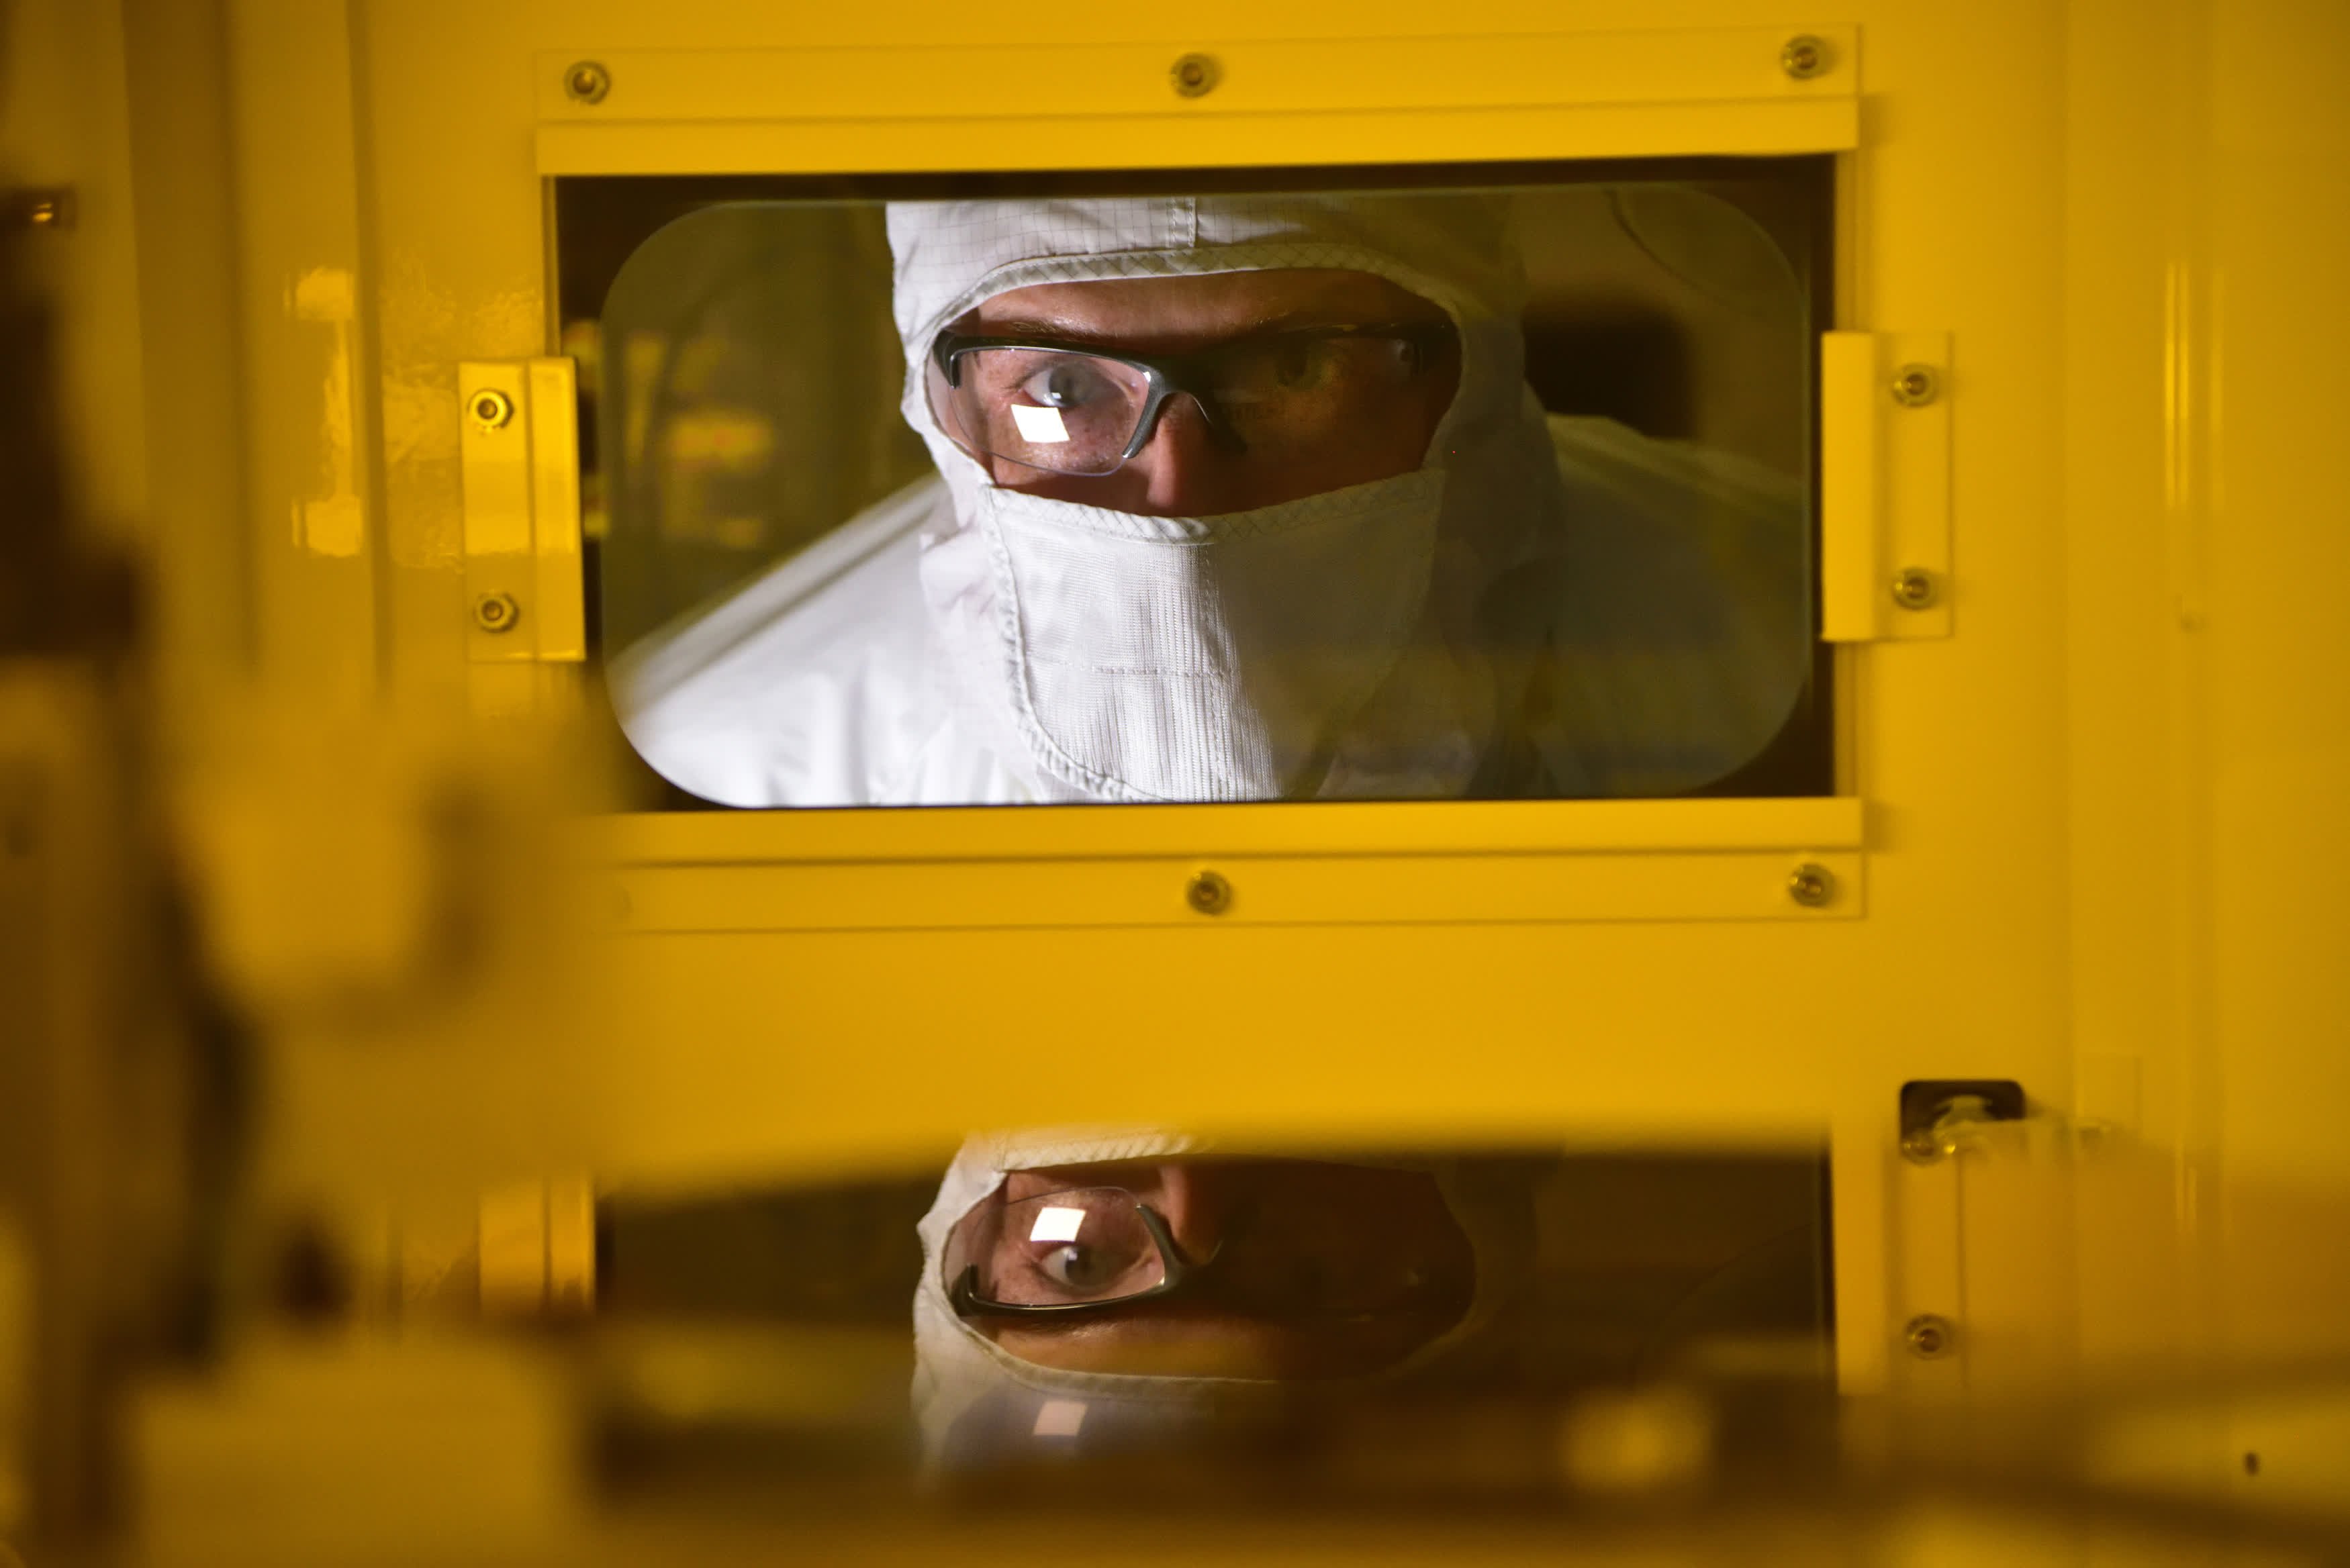 Intel launches apprenticeship program to combat semiconductor labor shortage